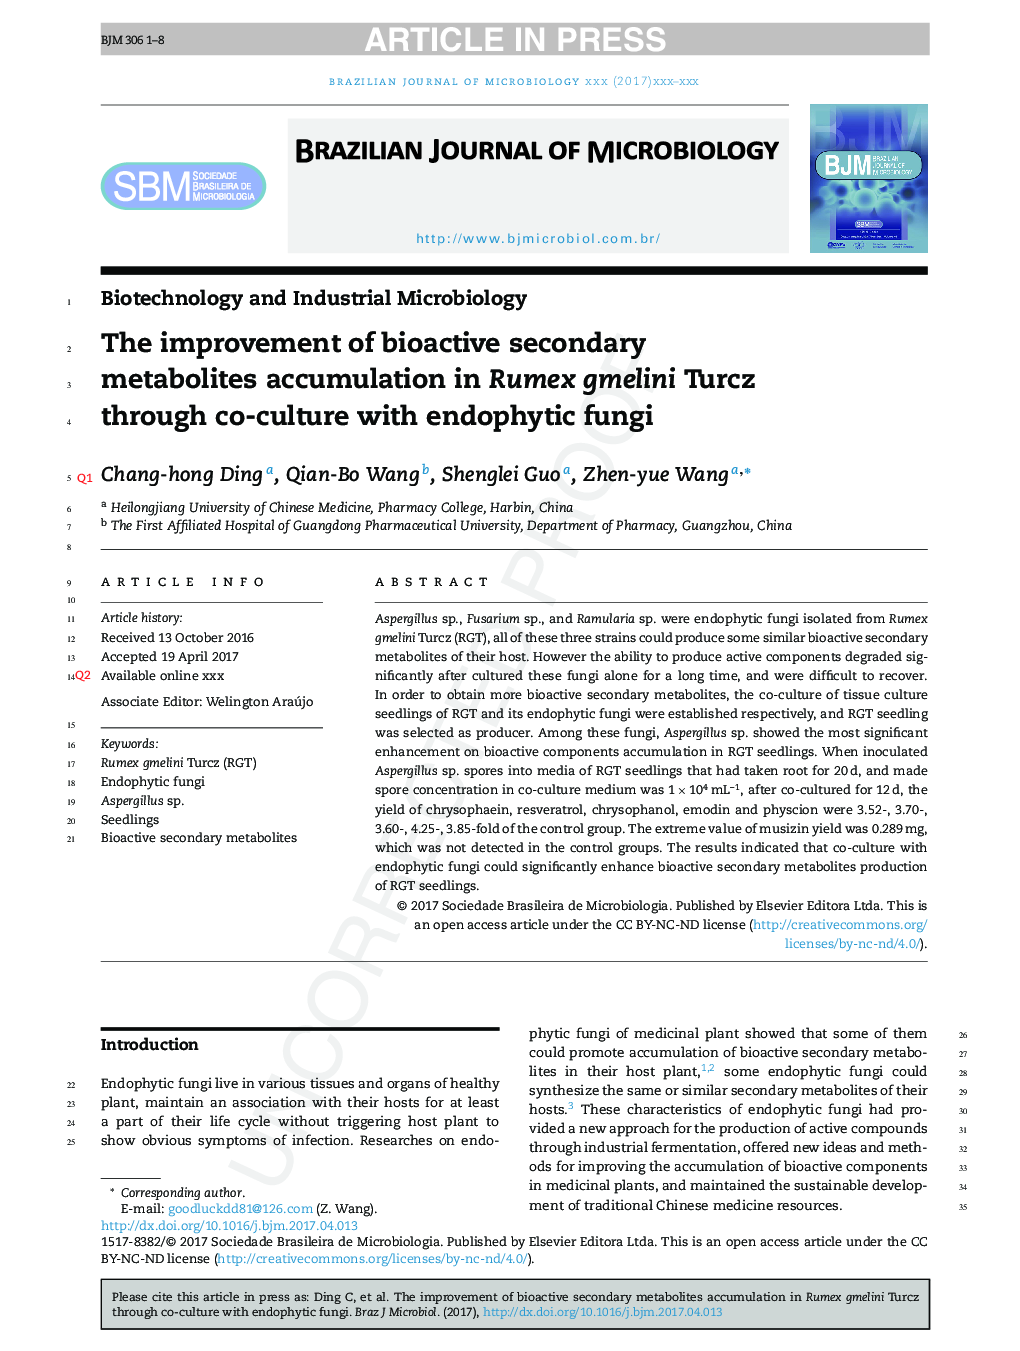 The improvement of bioactive secondary metabolites accumulation in Rumex gmelini Turcz through co-culture with endophytic fungi